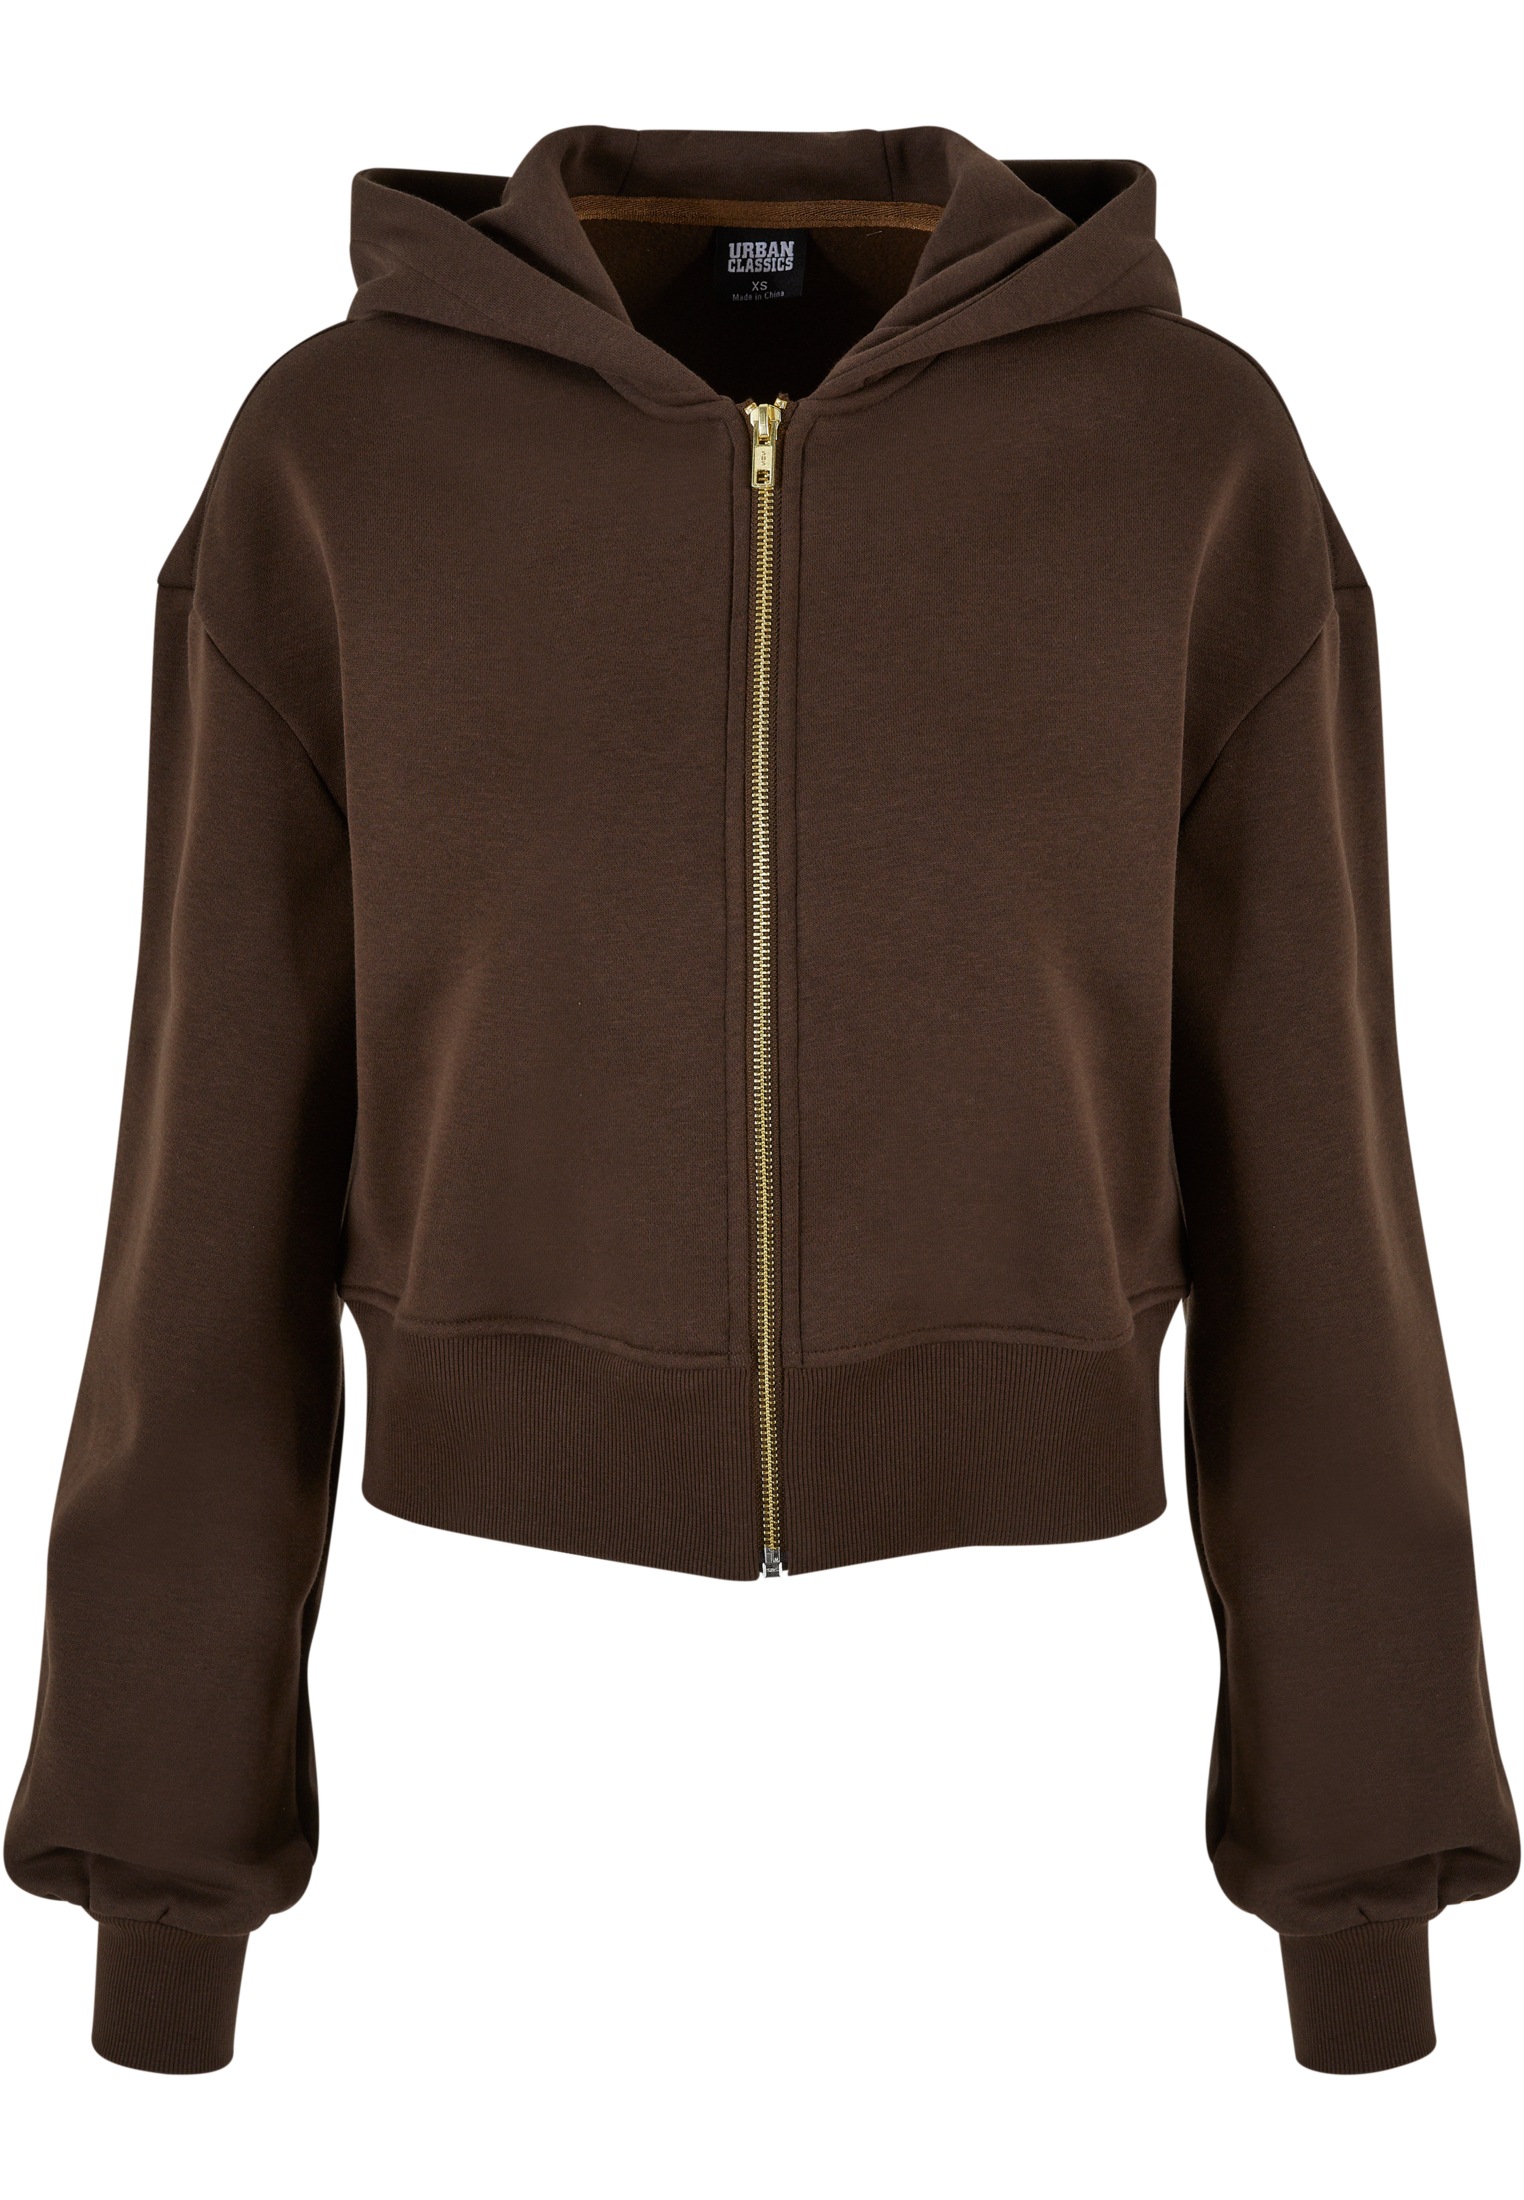 URBAN CLASSICS Jacket«, | walking (1 »Damen Short Ladies I\'m Oversized Zip Sweatjacke tlg.) kaufen online